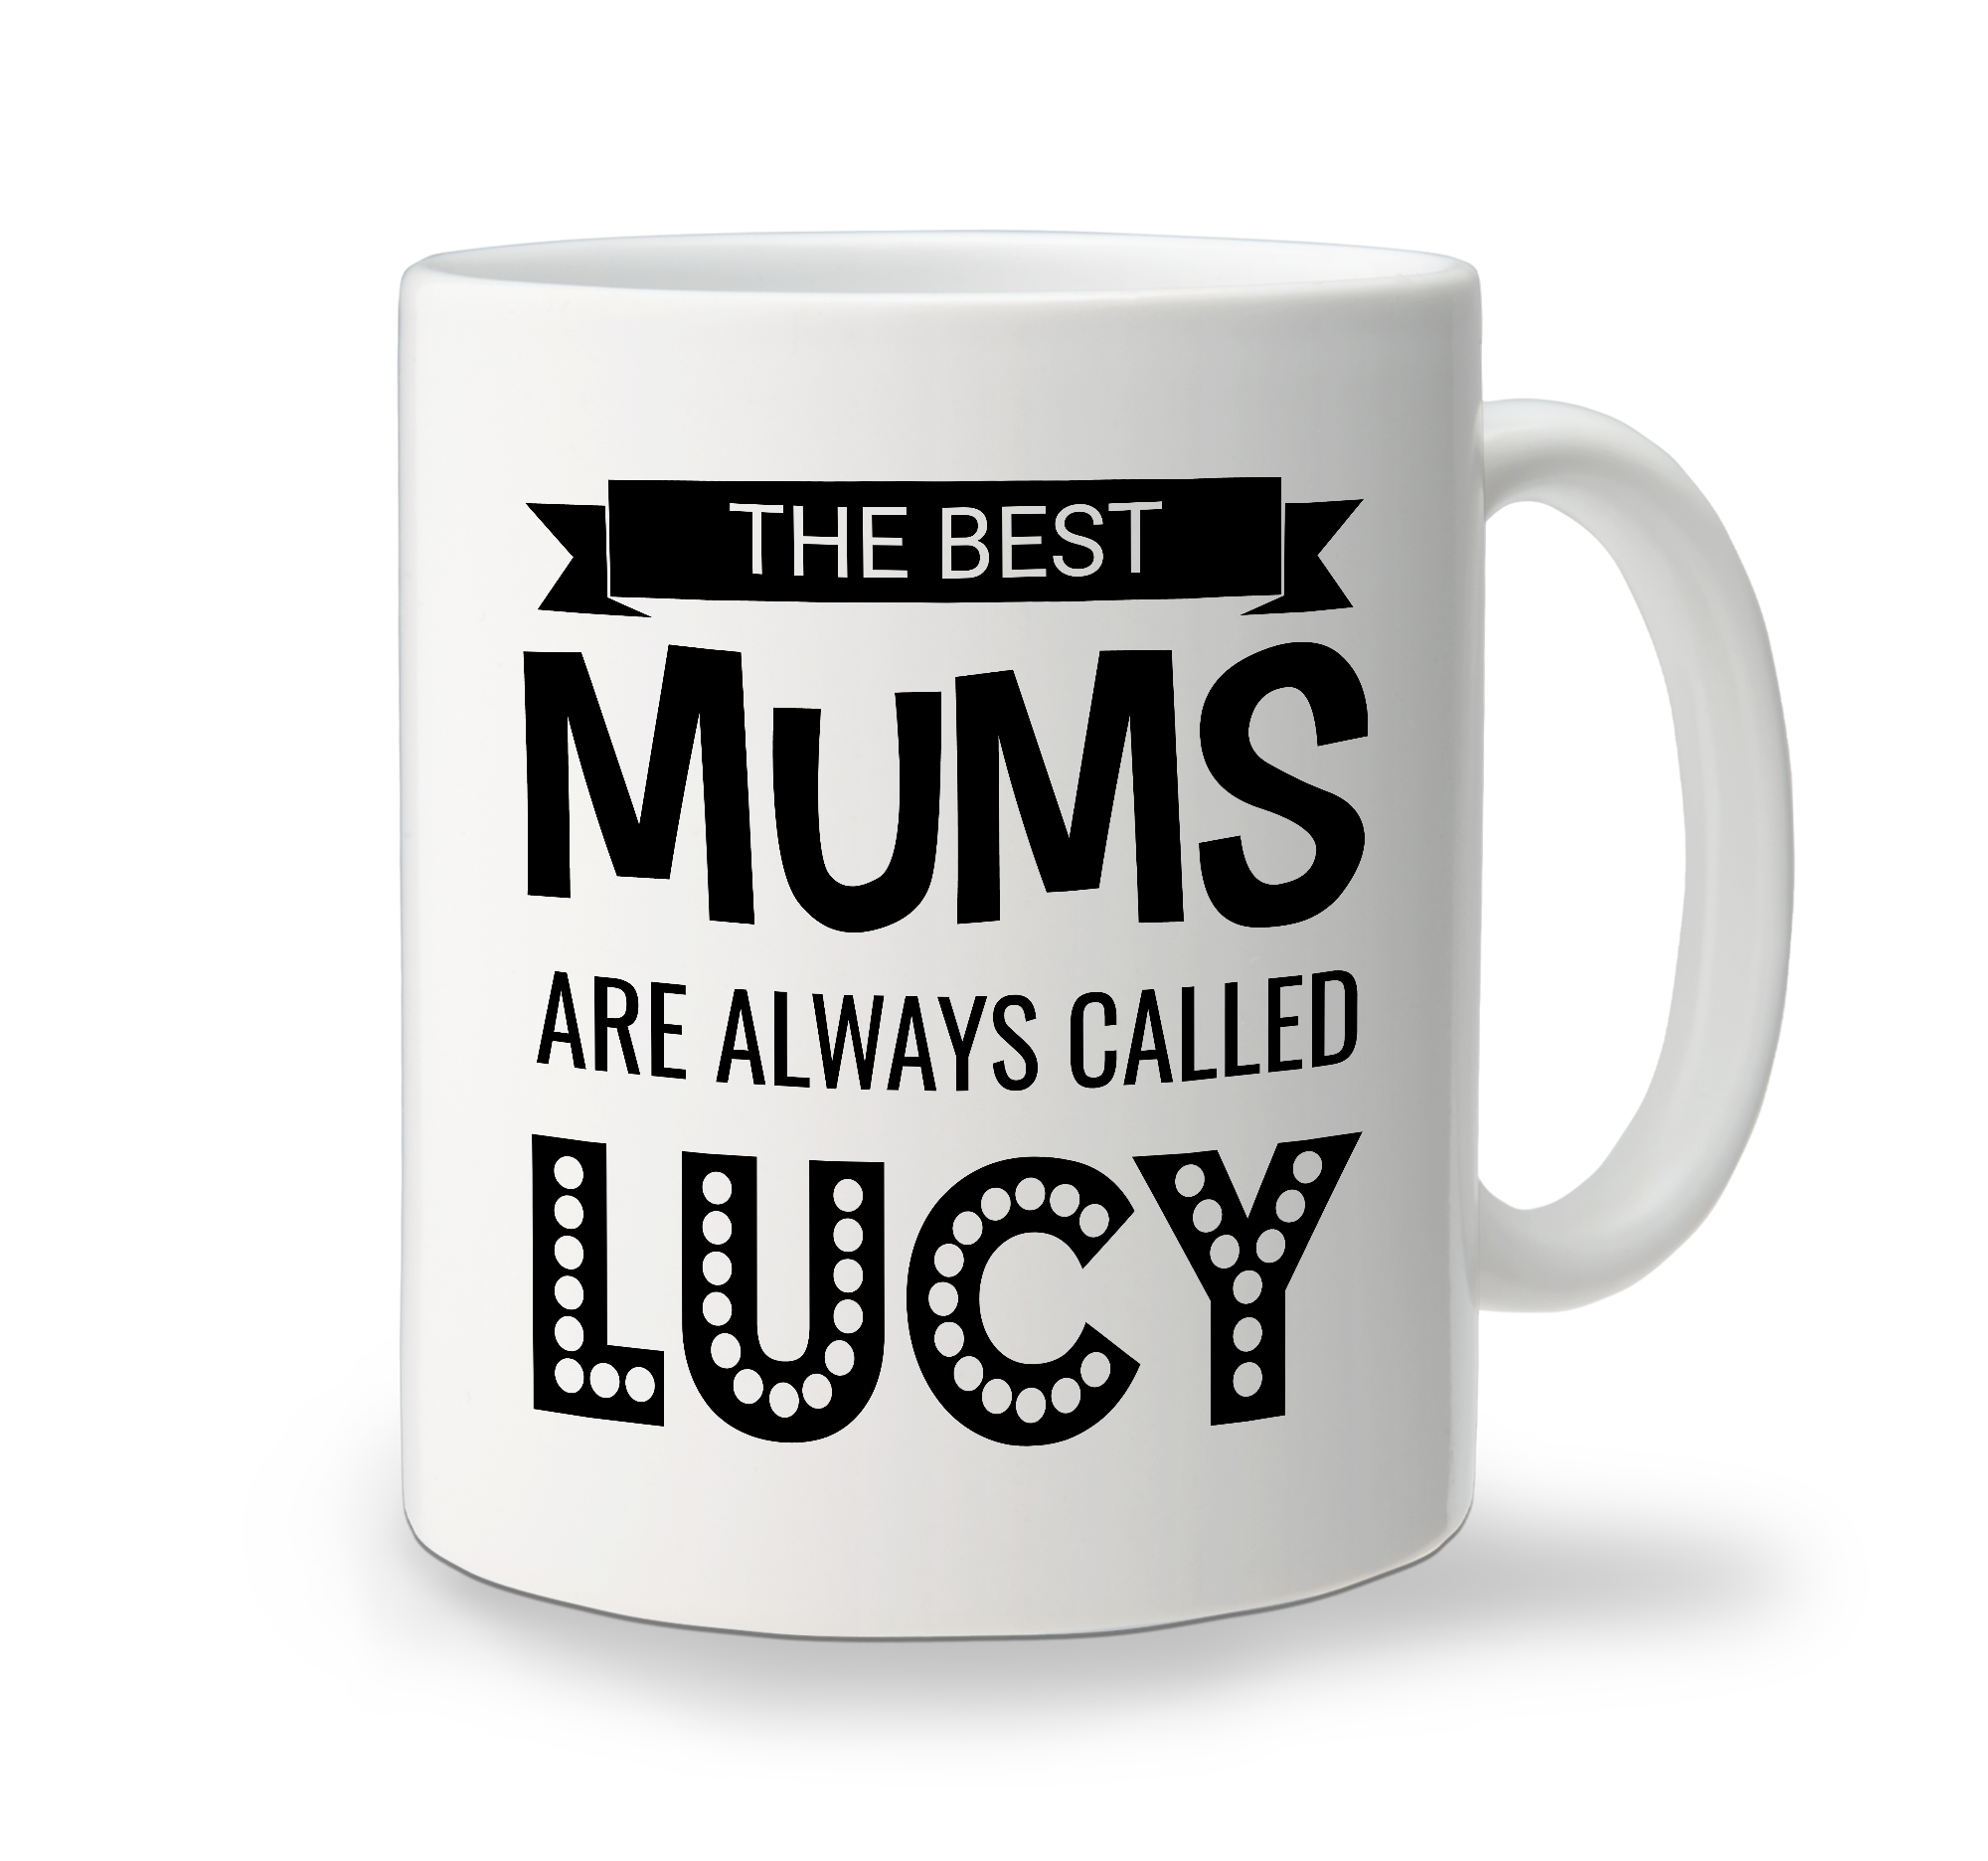 Ceramic Mug - Best Mums Are Called